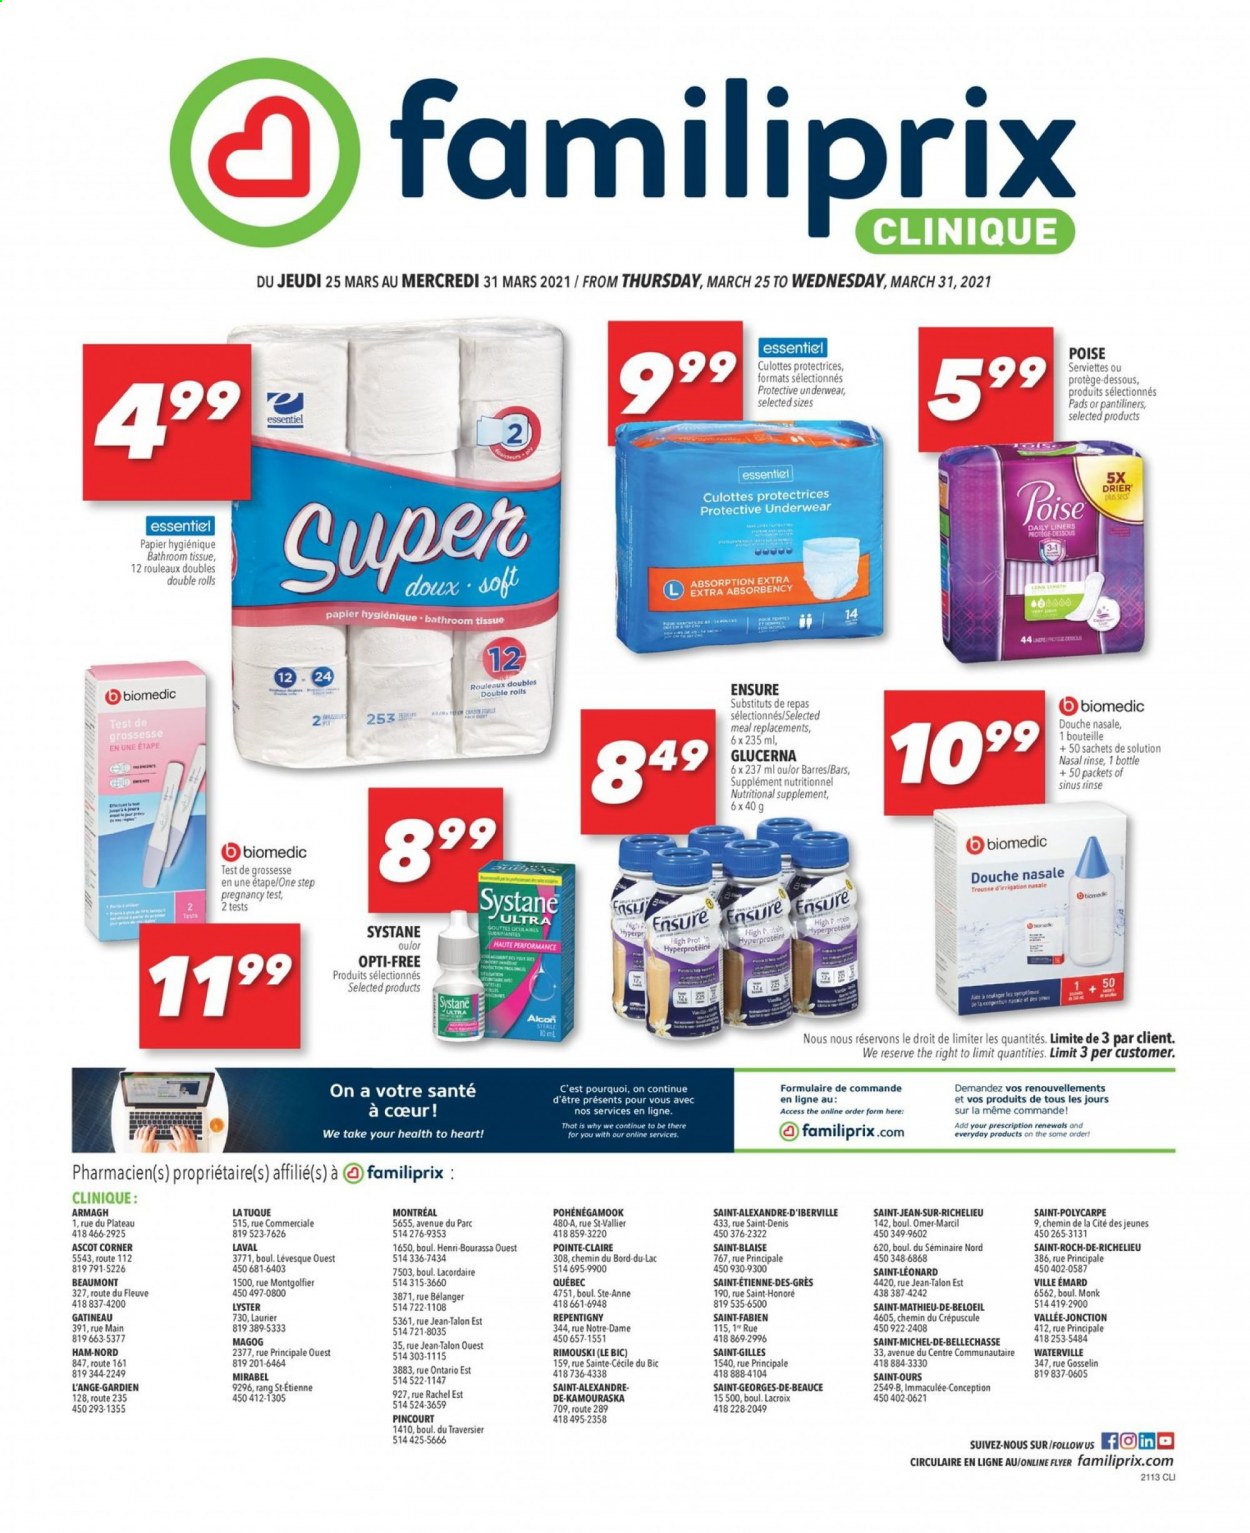 thumbnail - Familiprix Clinique Flyer - March 25, 2021 - March 31, 2021 - Sales products - Mars, bath tissue, pantiliners, Clinique, BIC, Glucerna, nutritional supplement, Systane. Page 1.